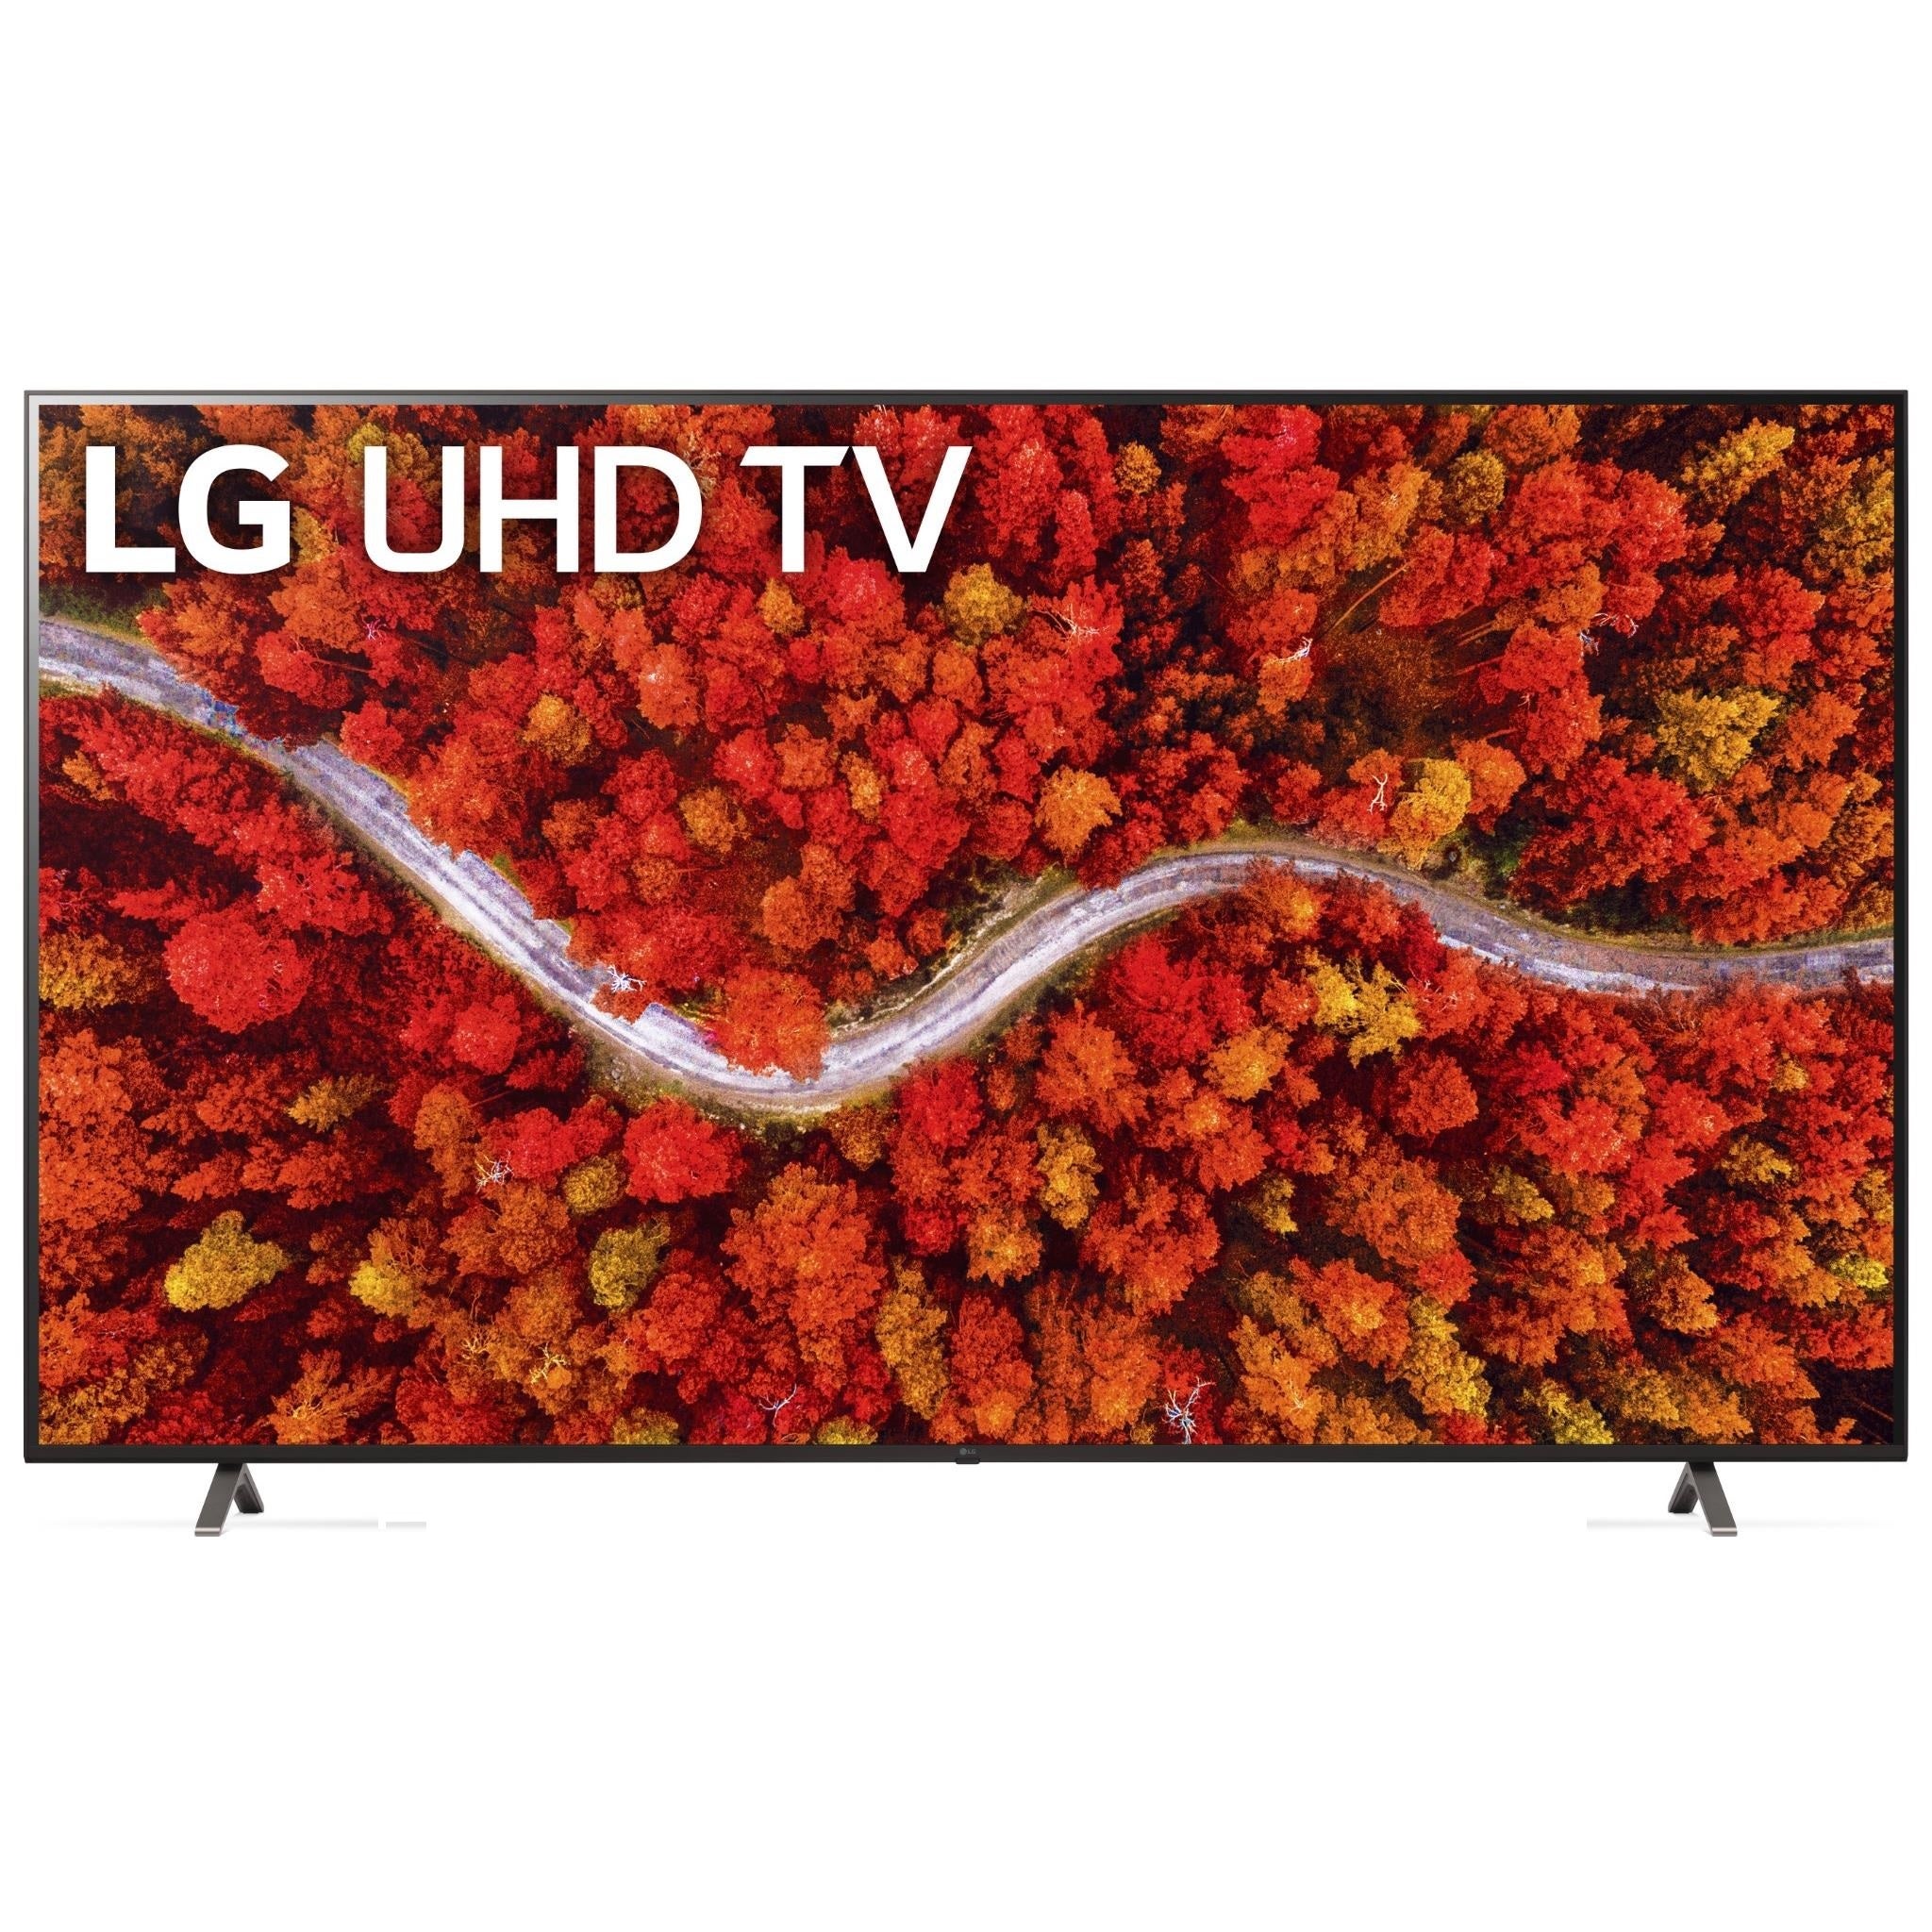 LG 65UP8000PTB 65inch UHD LED LCD TV